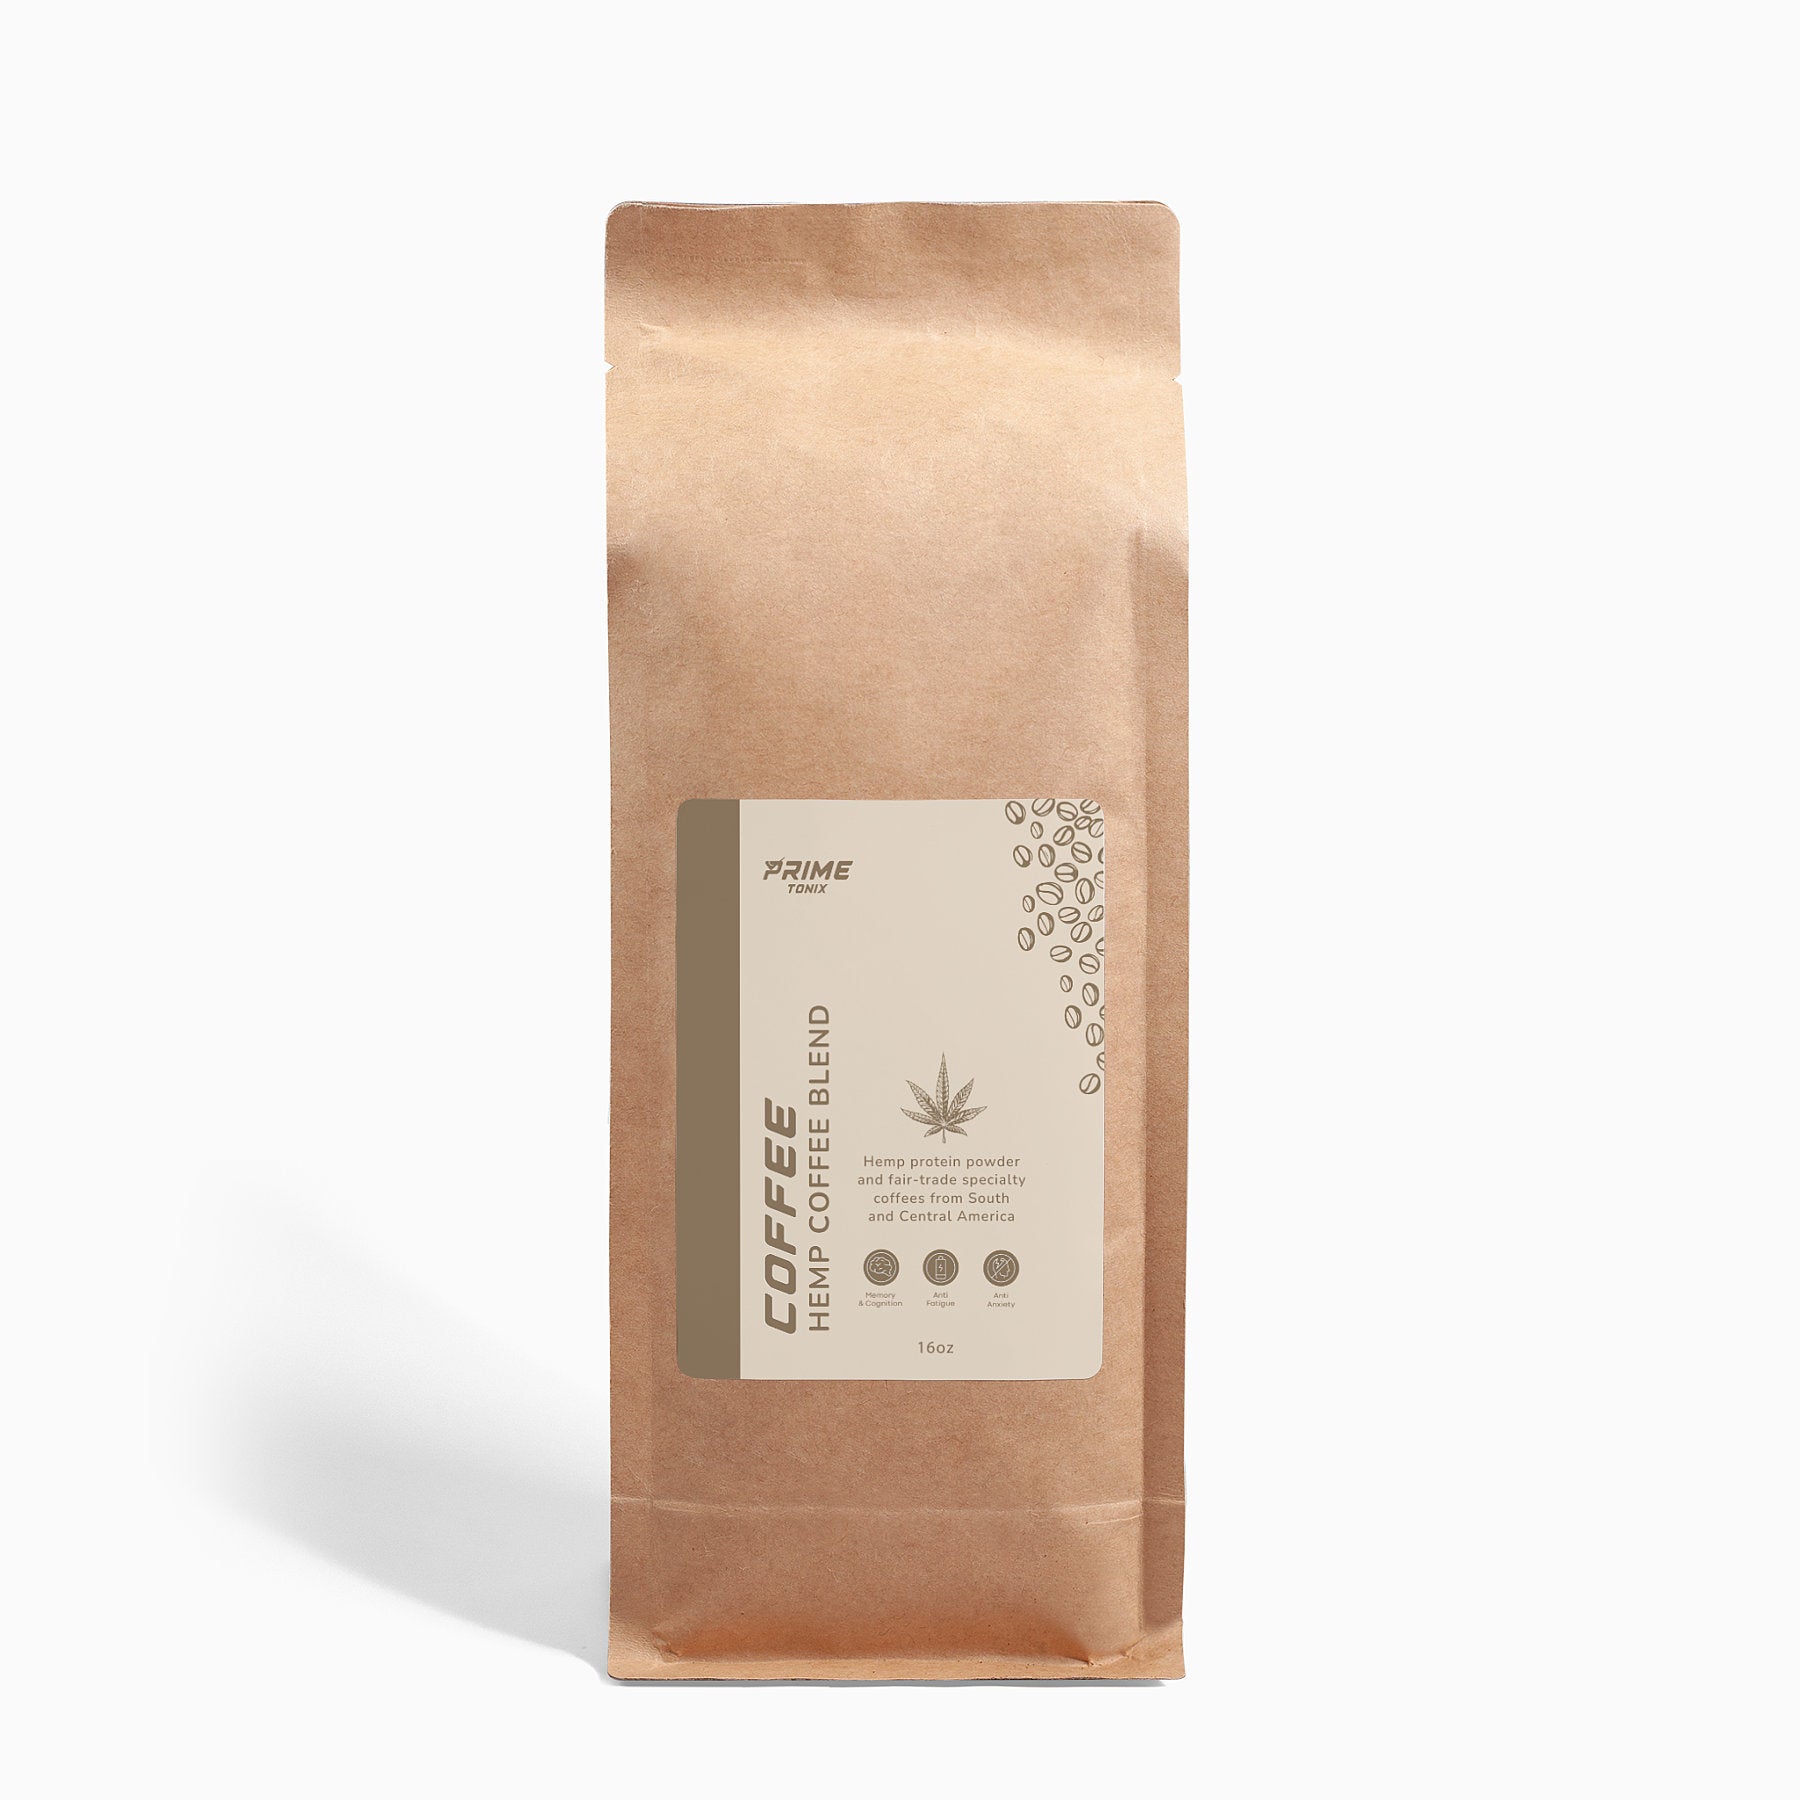 Prime Organic Hemp Coffee Blend - Medium Roast 16oz